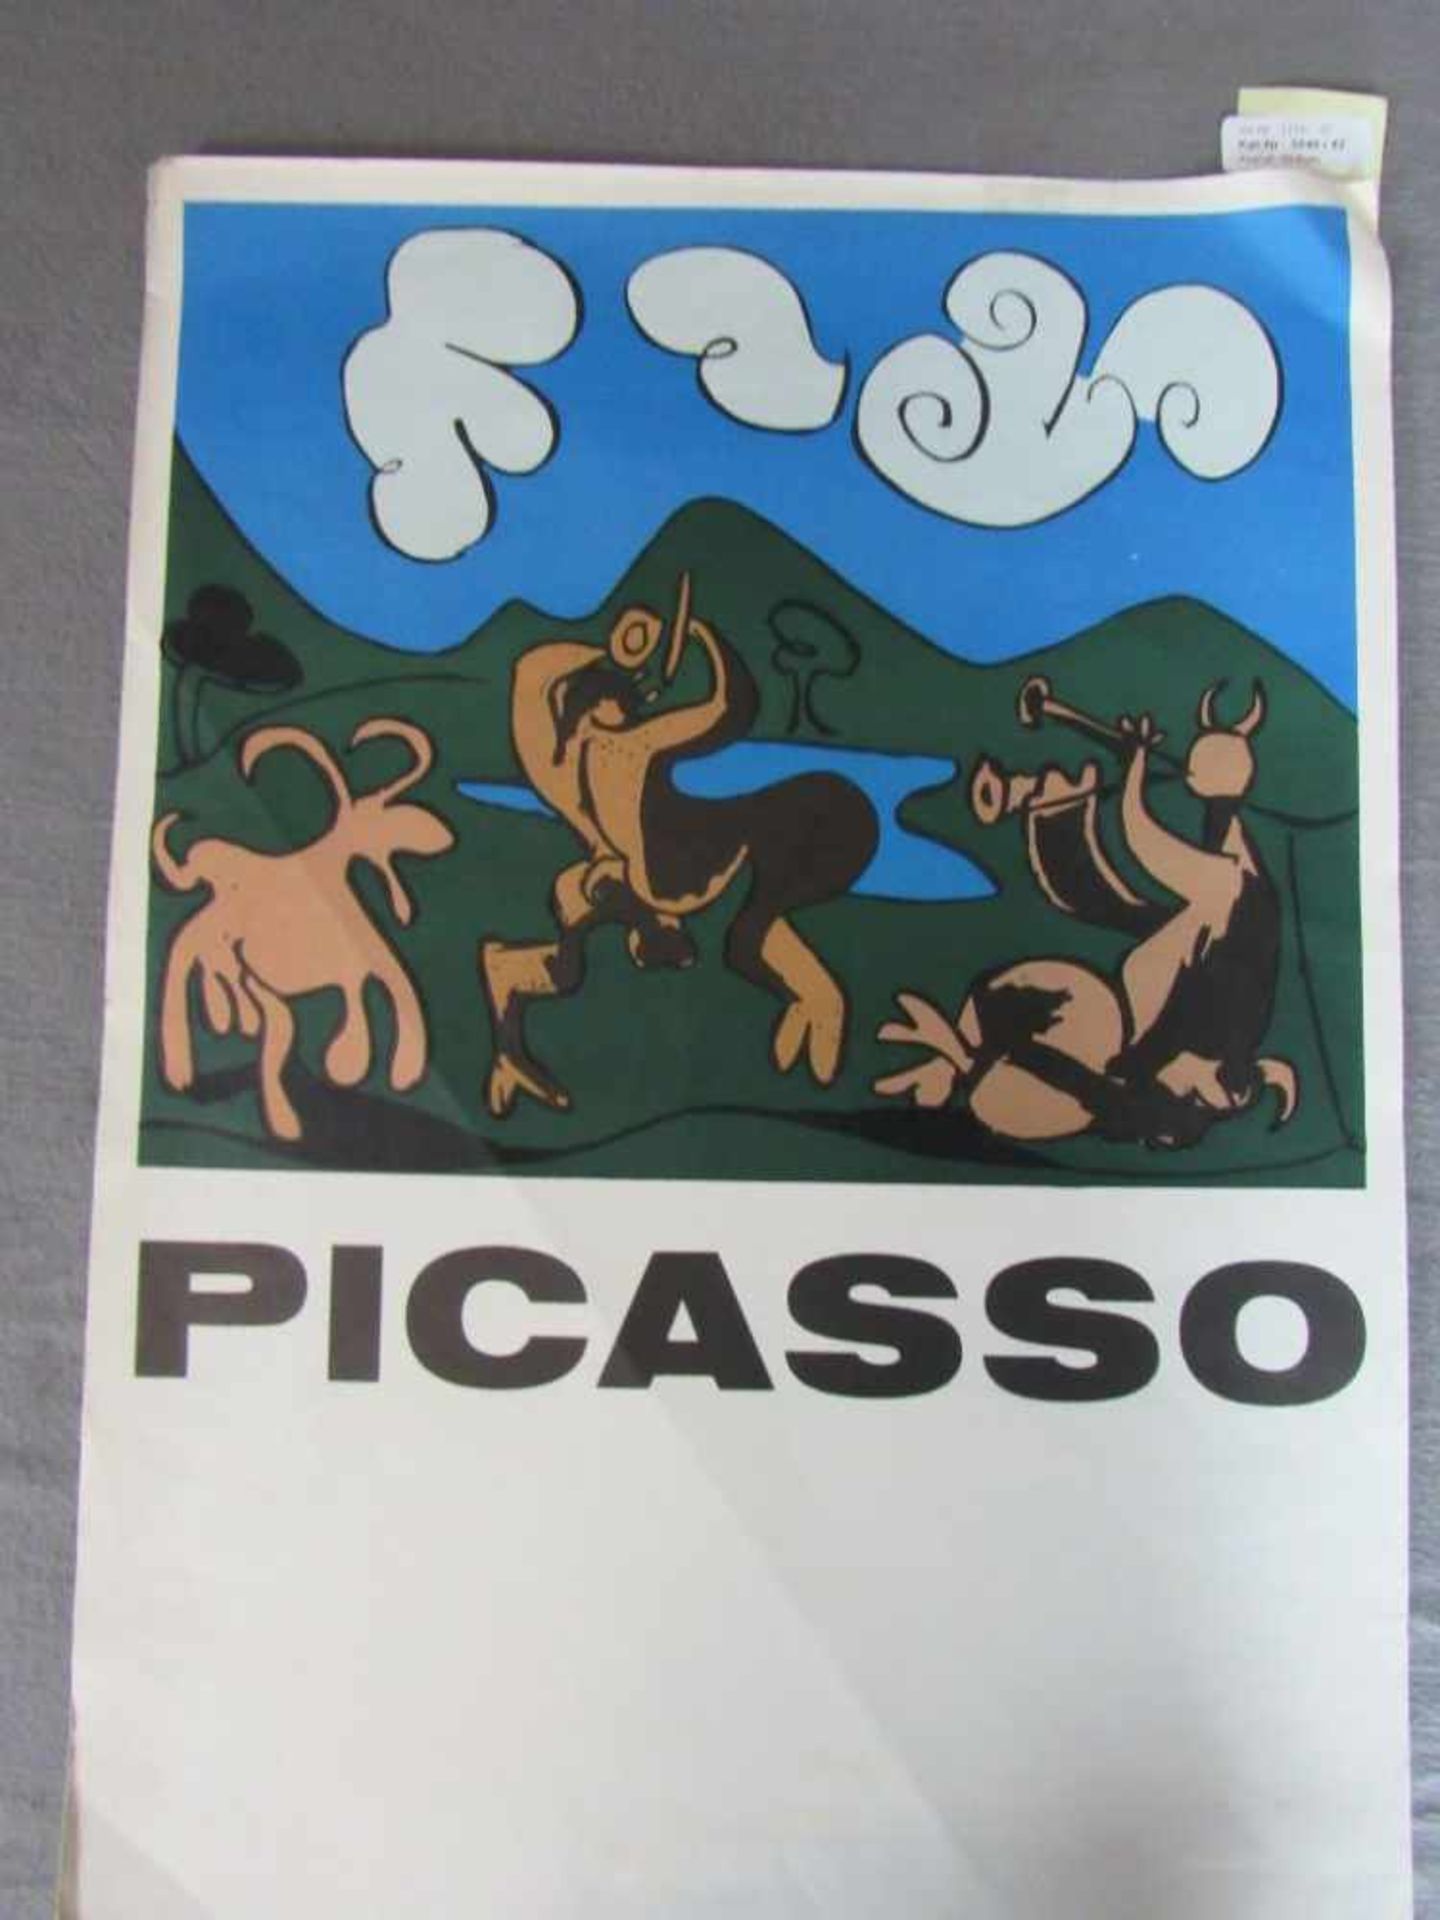 Grafik Picasso 59x41cm- - -20.00 % buyer's premium on the hammer price19.00 % VAT on buyer's